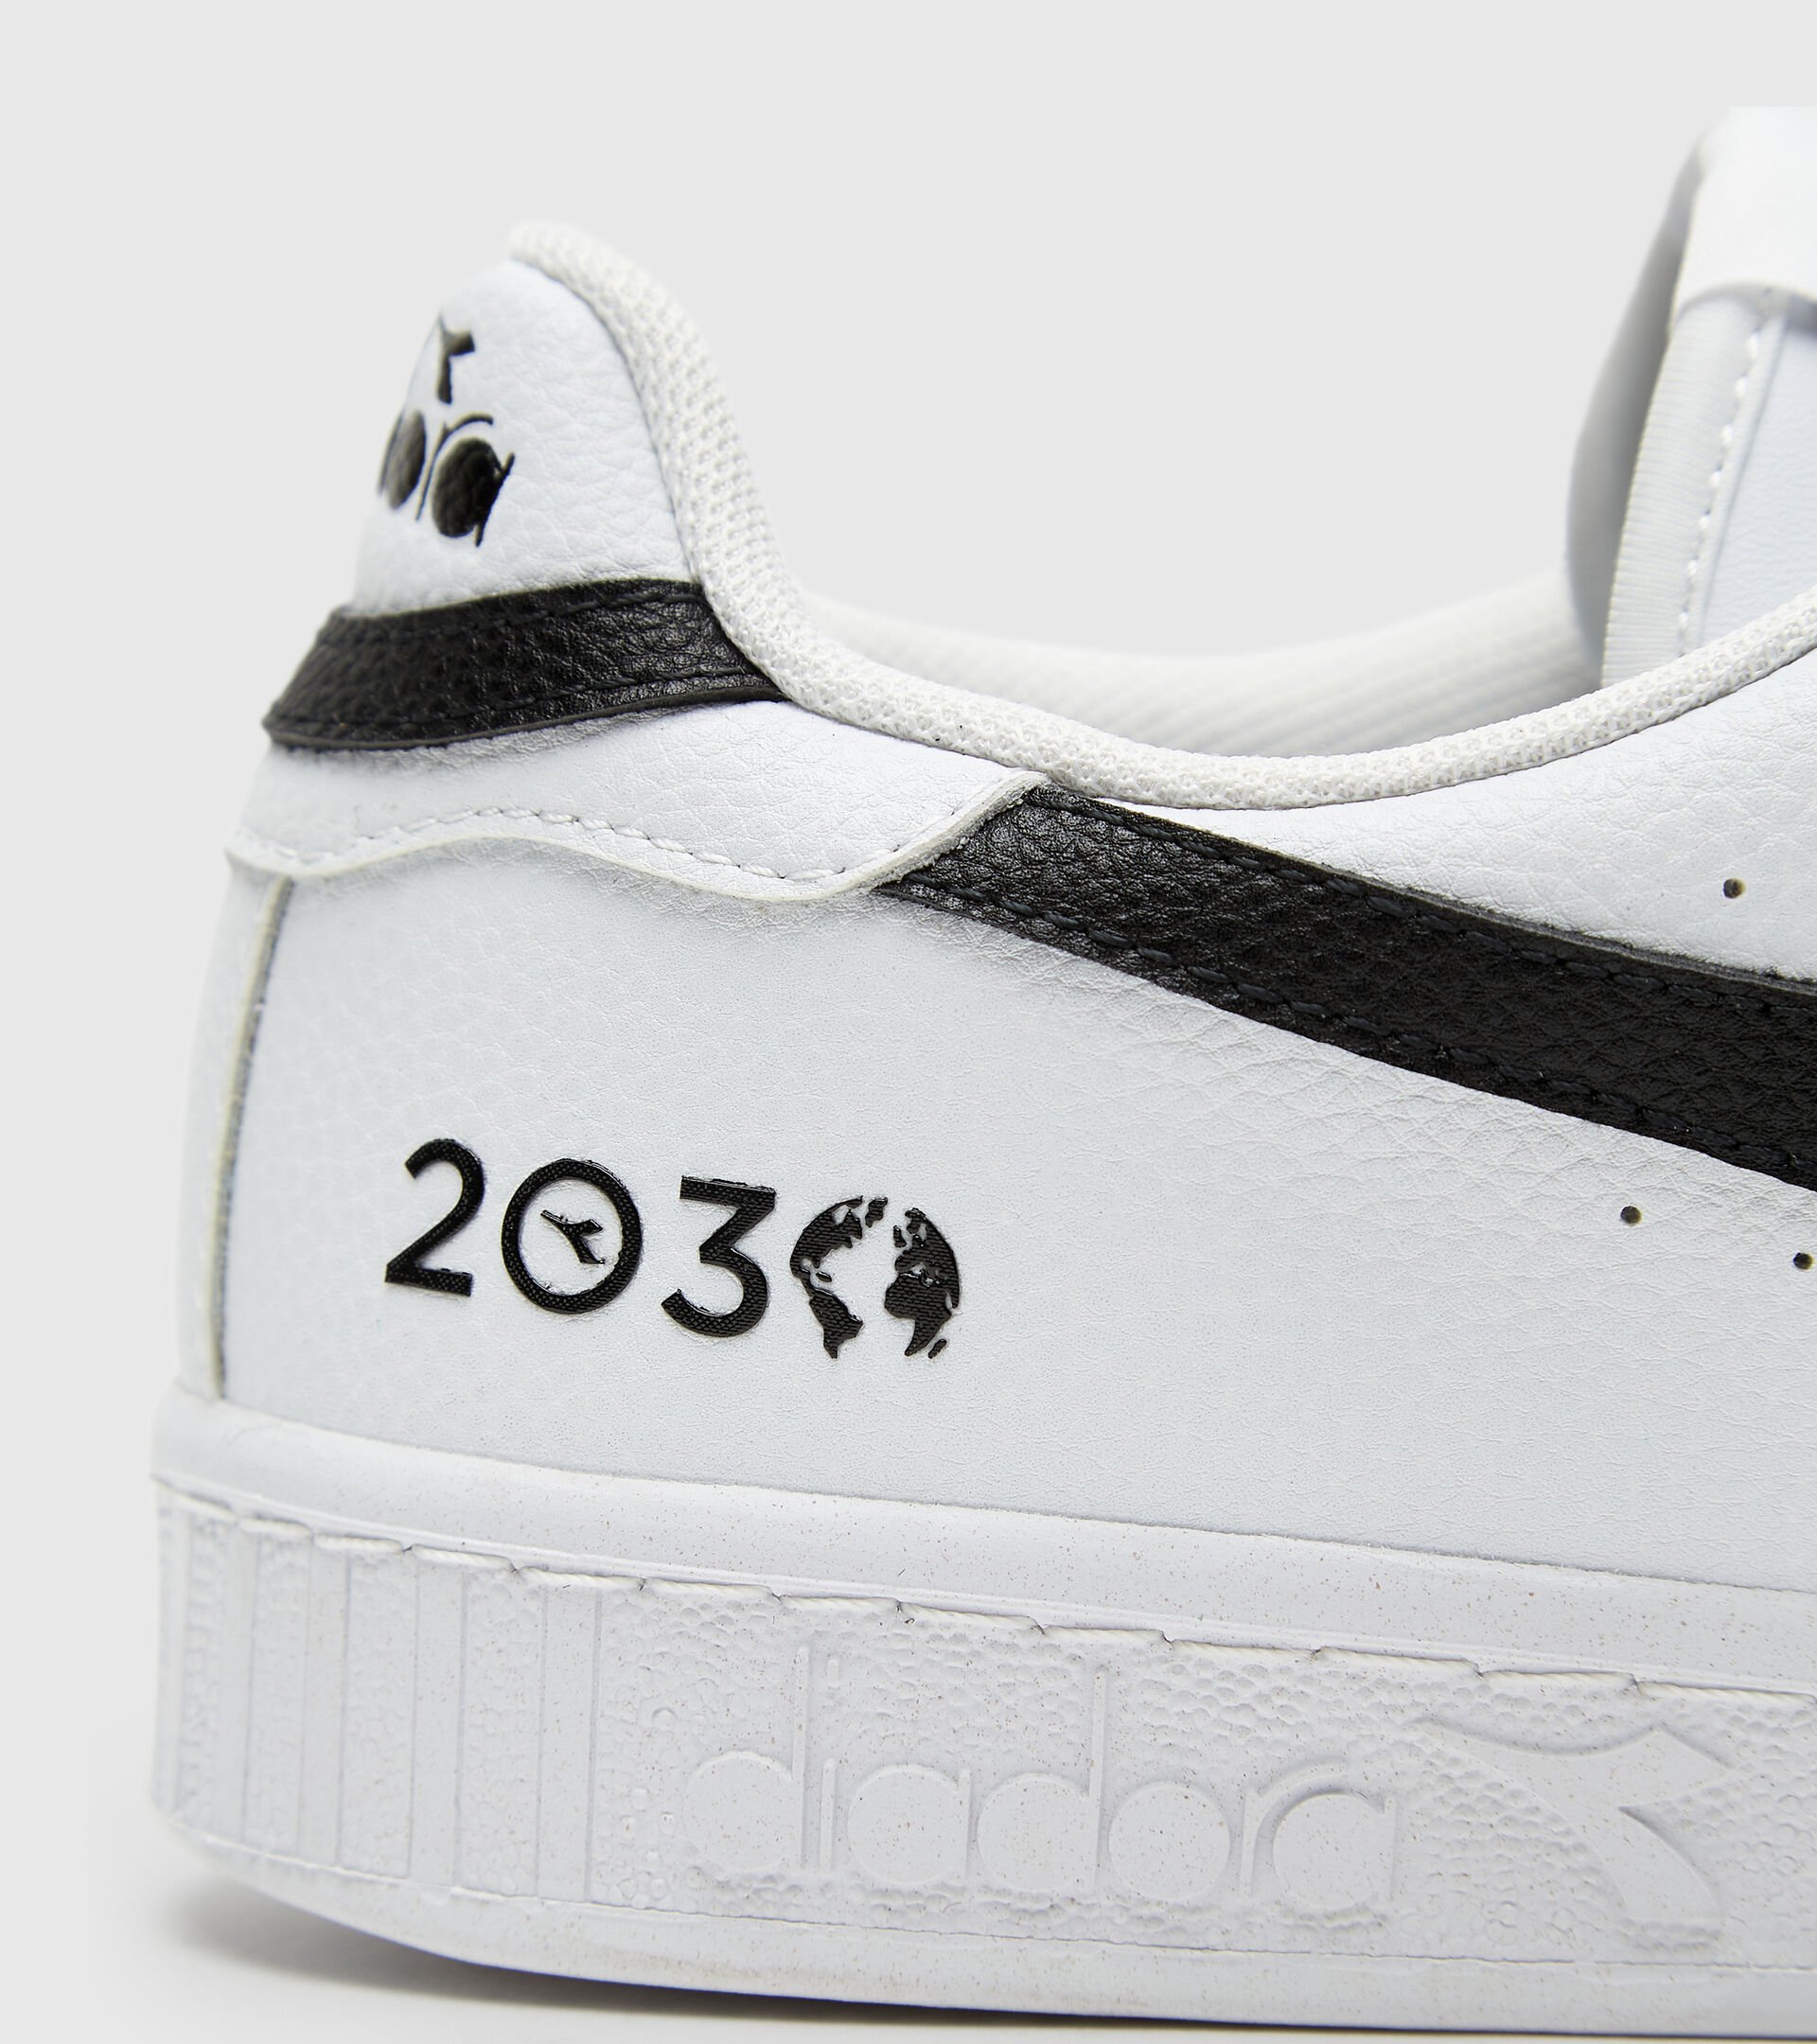 Sporty sneakers - Unisex GAME L LOW 2030 WHITE/BLACK - Diadora